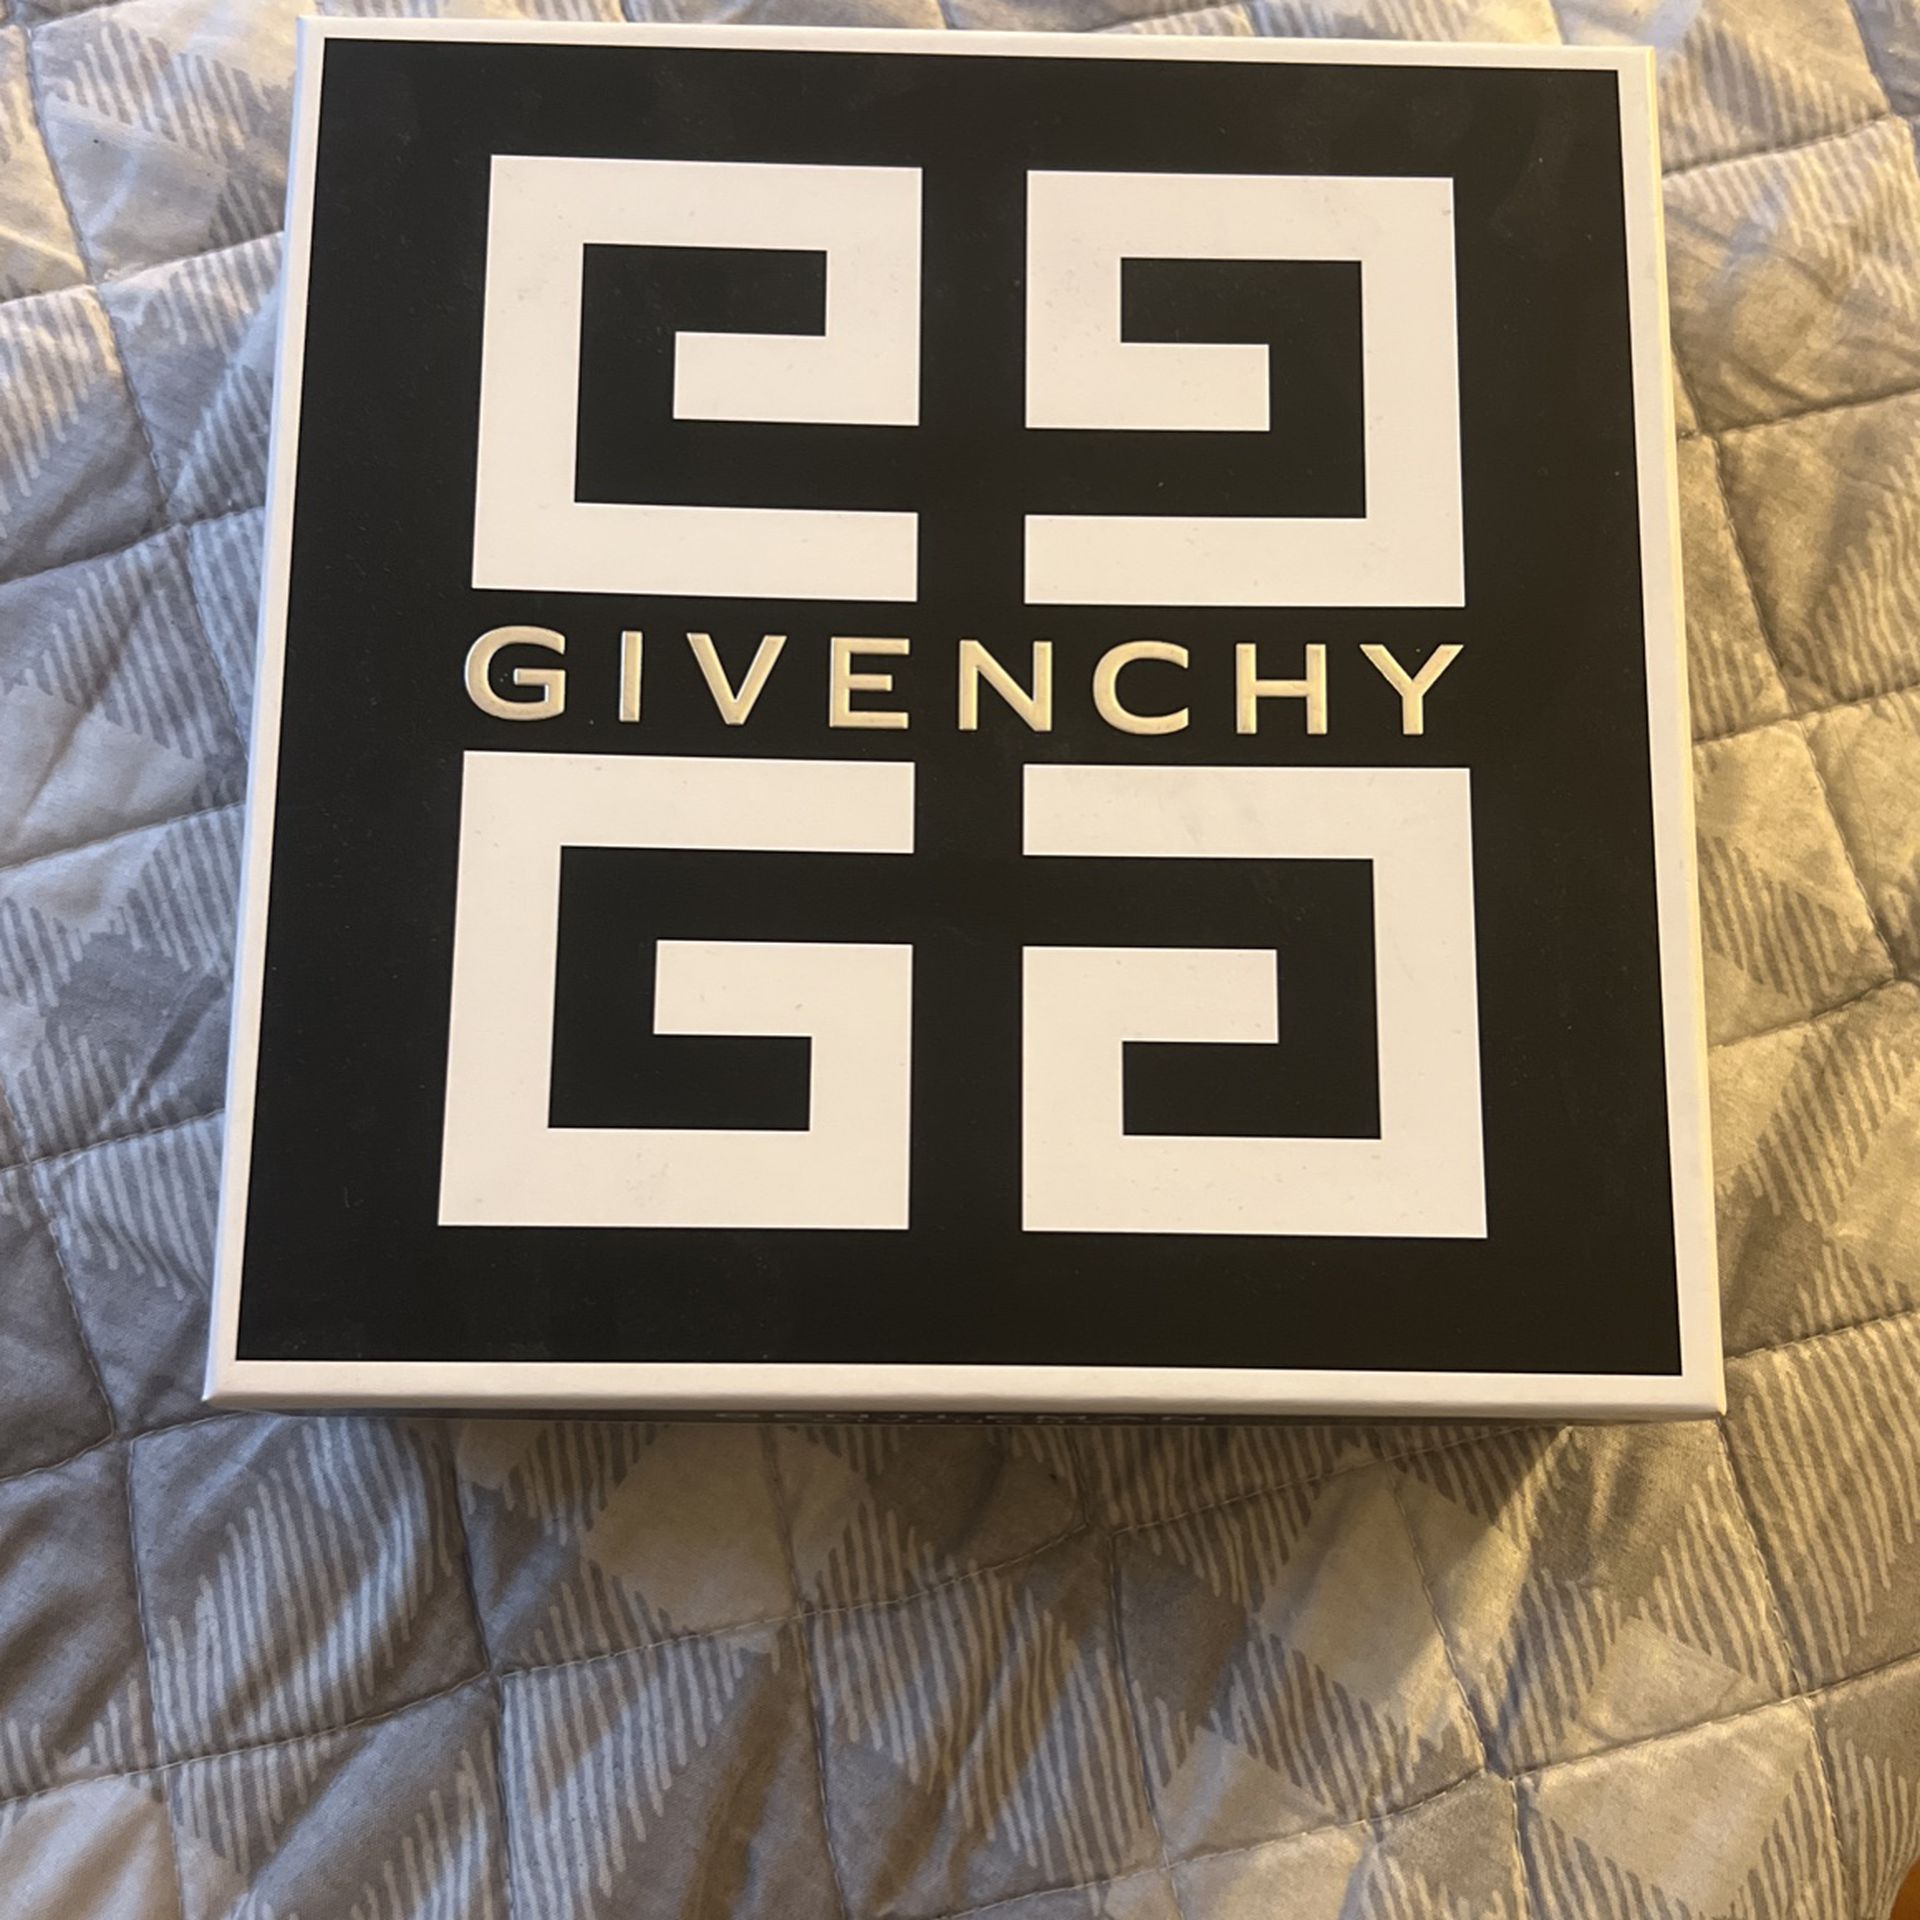 Givenchy “Gentlemen” Cologne